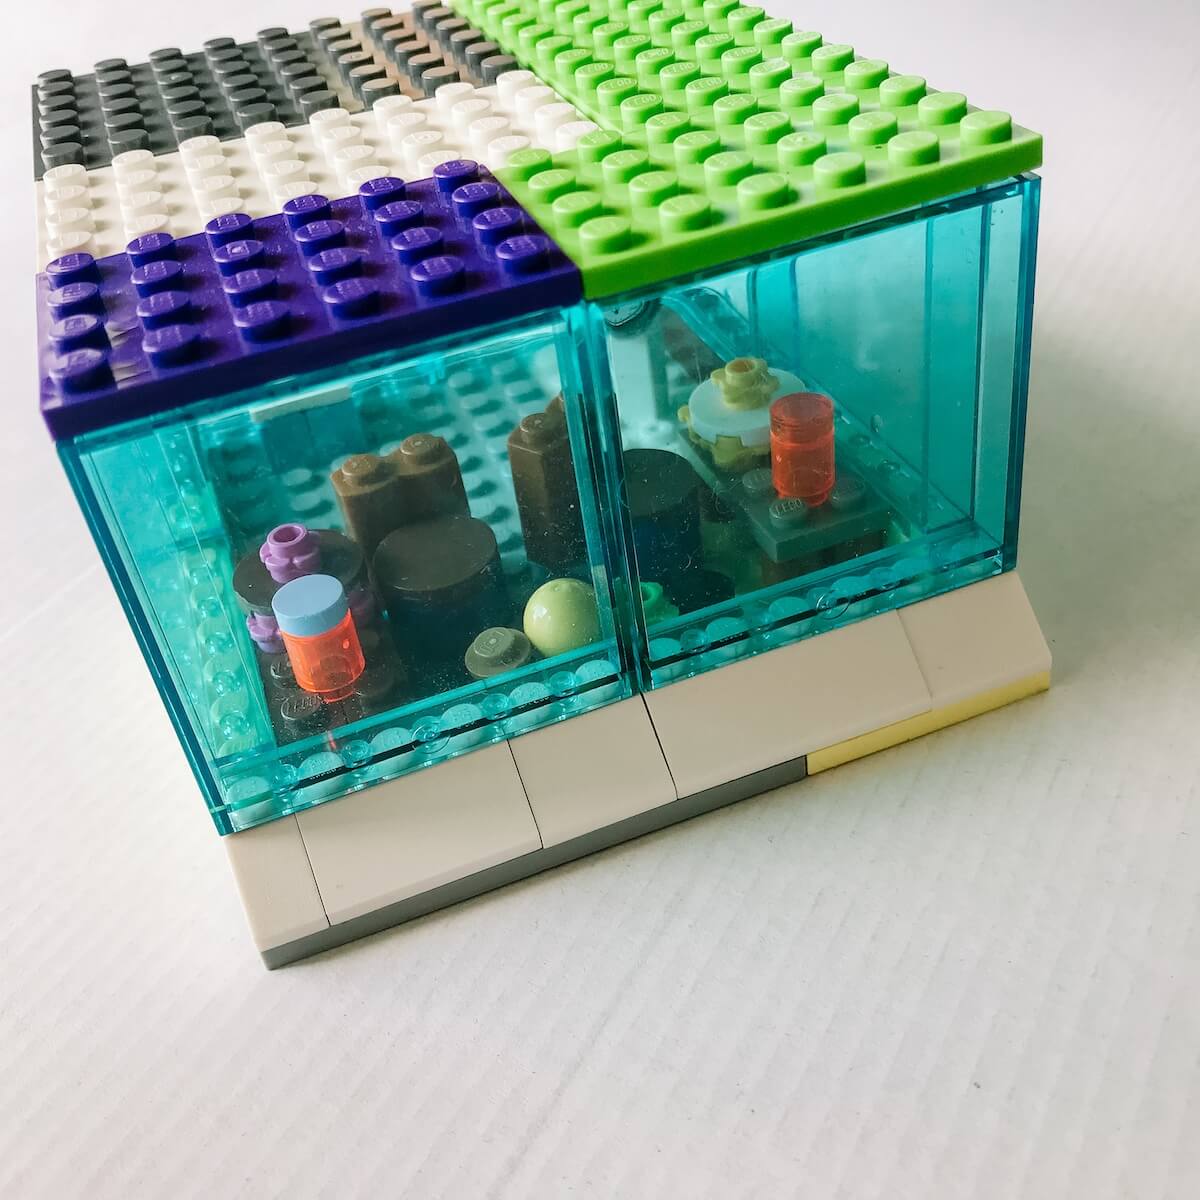 Lego building with clear window bricks.